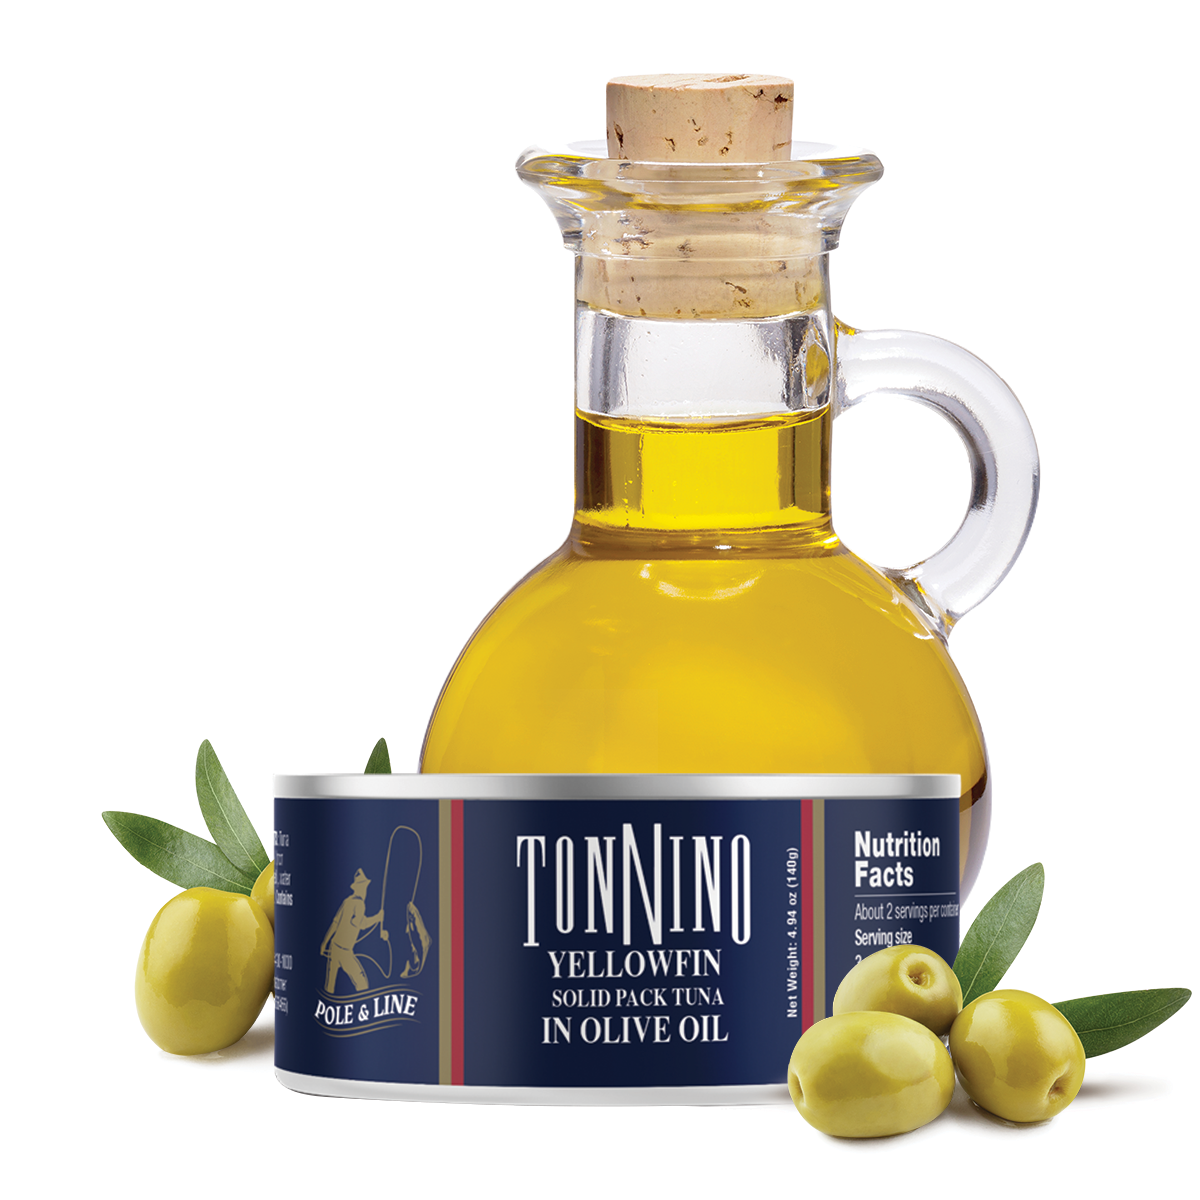 Tonnino Solid Pack Tuna In Olive Oil, 4.94 oz